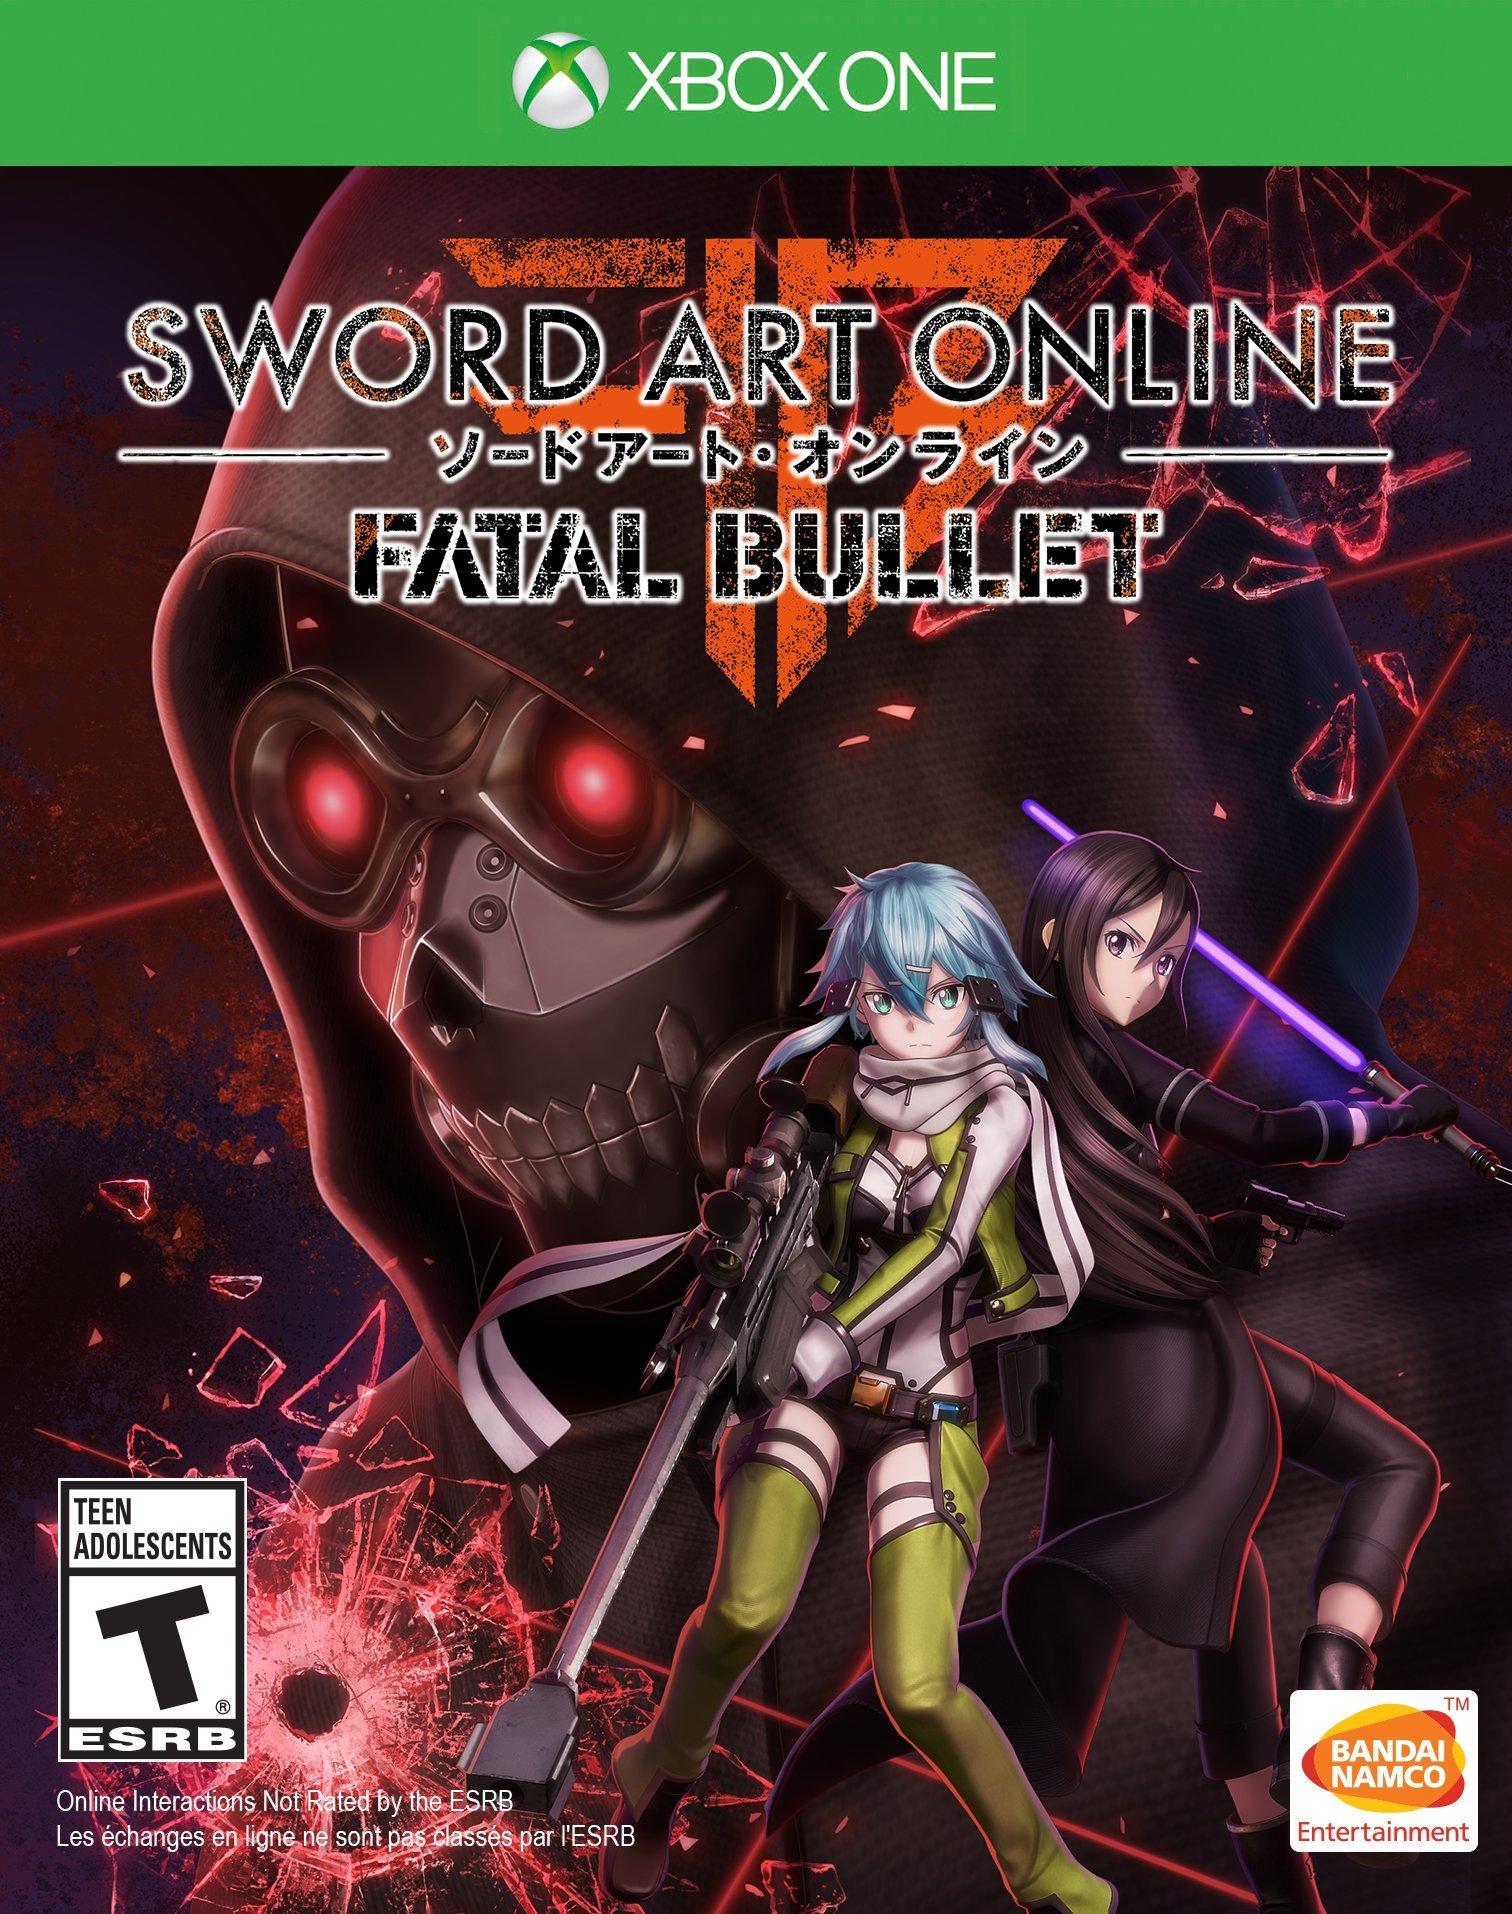 Sword Art Online: Fatal Bullet - Complete Edition Review